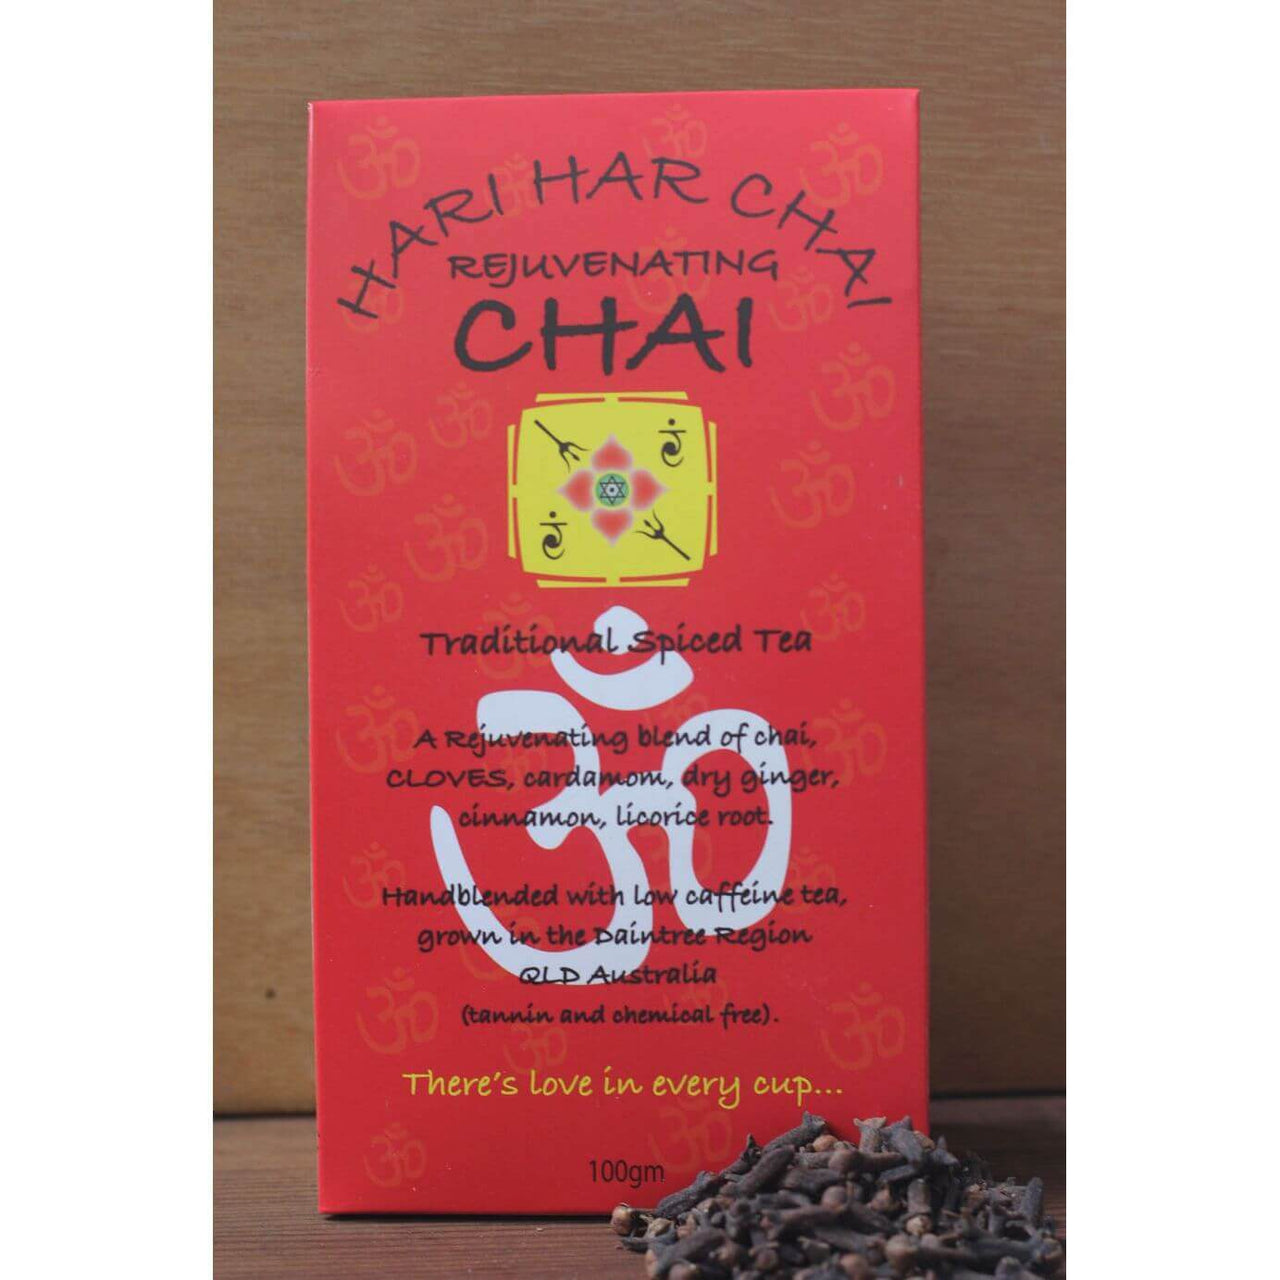 Rejuvenating Chai, Hari Har Chai, Traditional Ayurvedic Spiced Tea